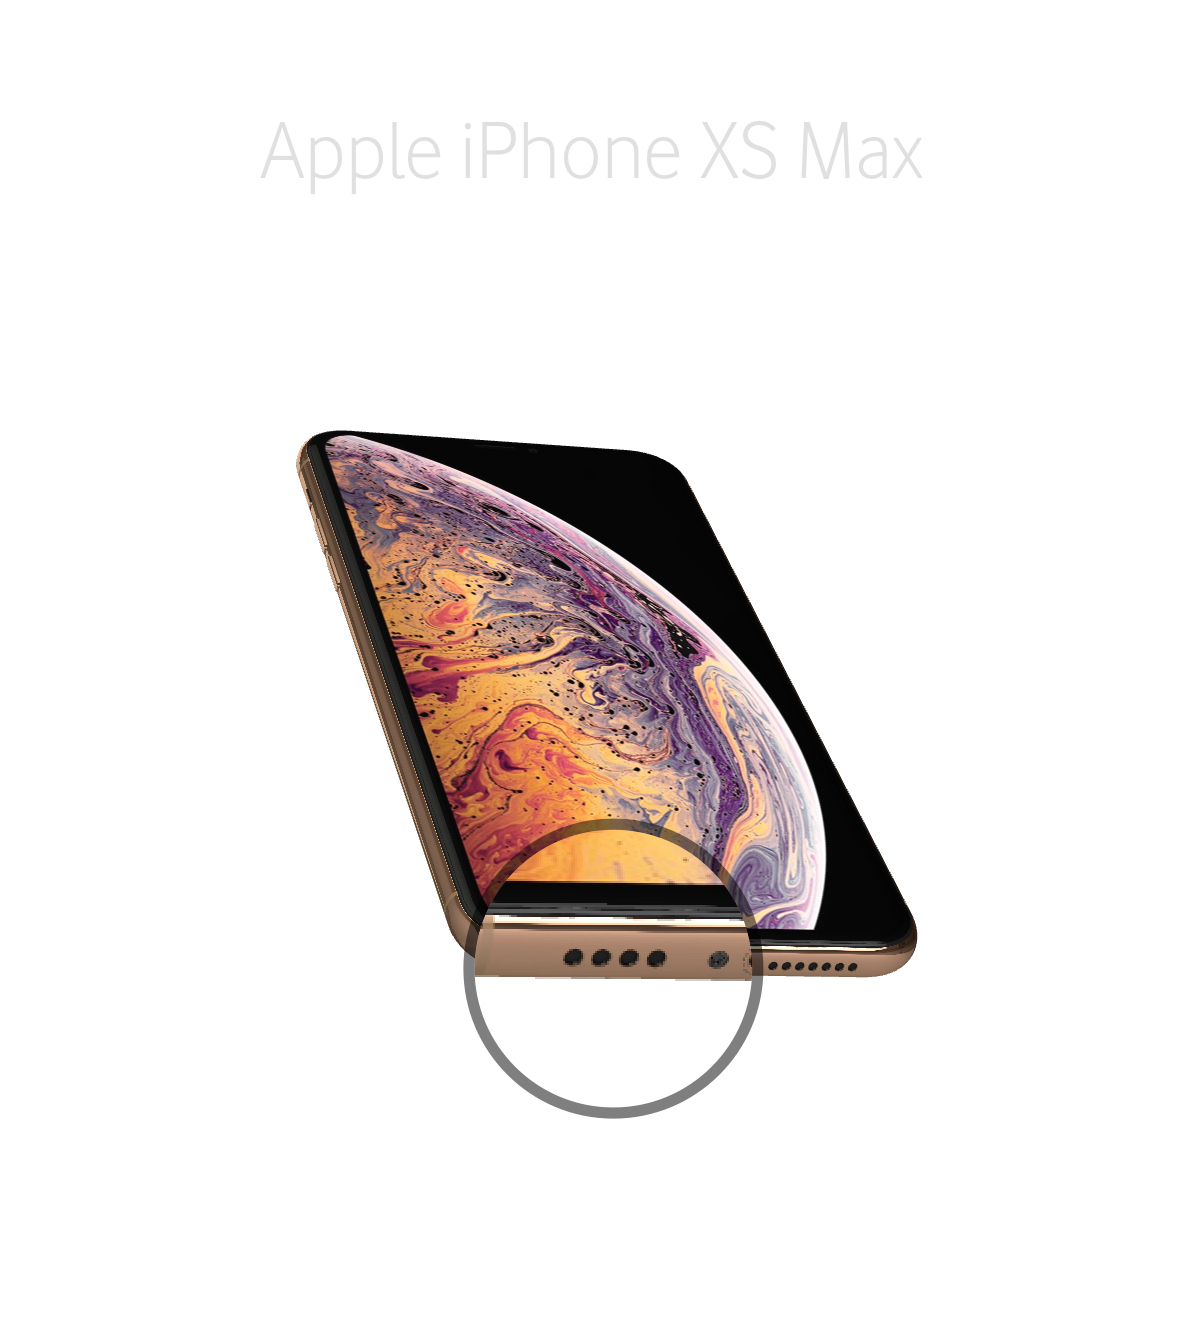 Laga samtalshögtalare iPhone Xs Max